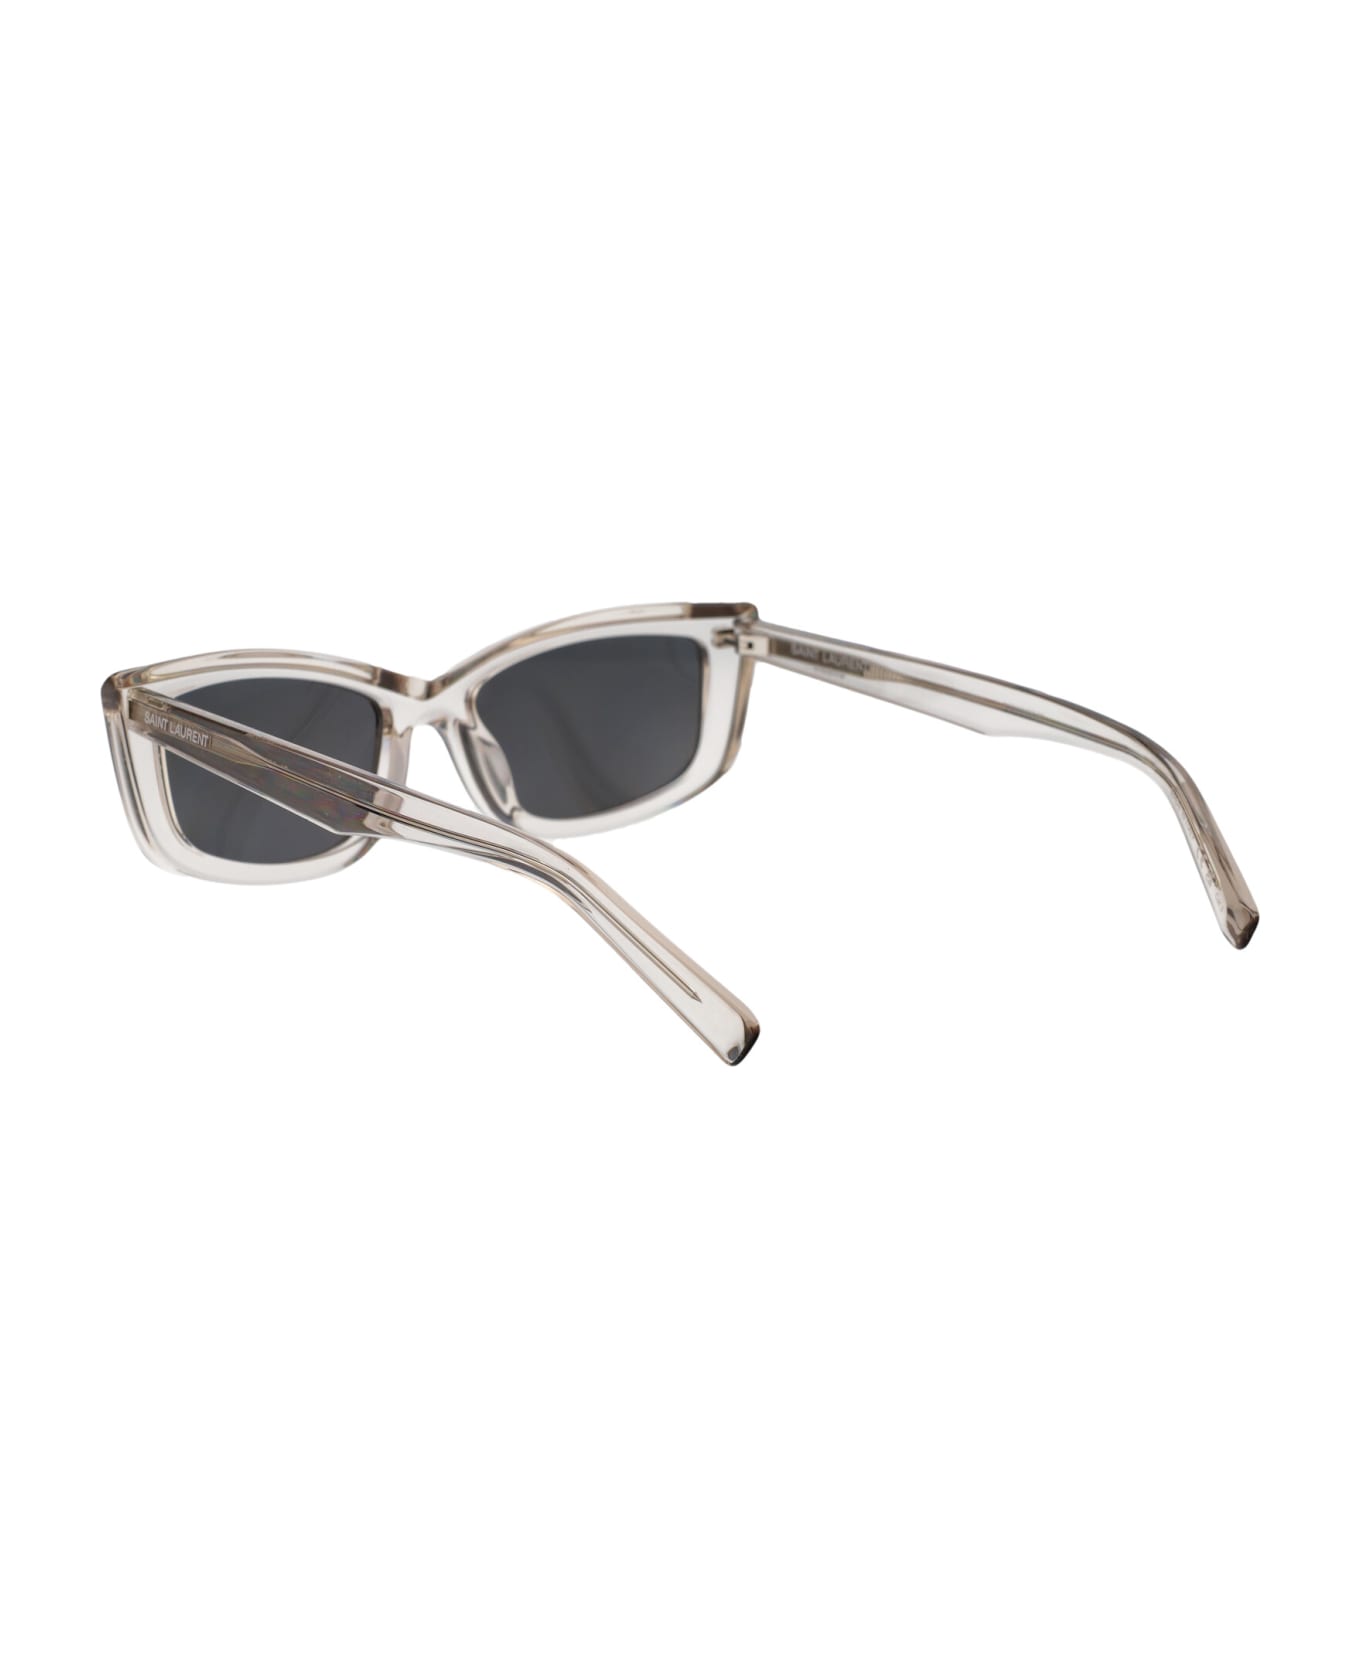 Saint Laurent Eyewear Sl 658 Sunglasses - 003 BEIGE BEIGE SILVER